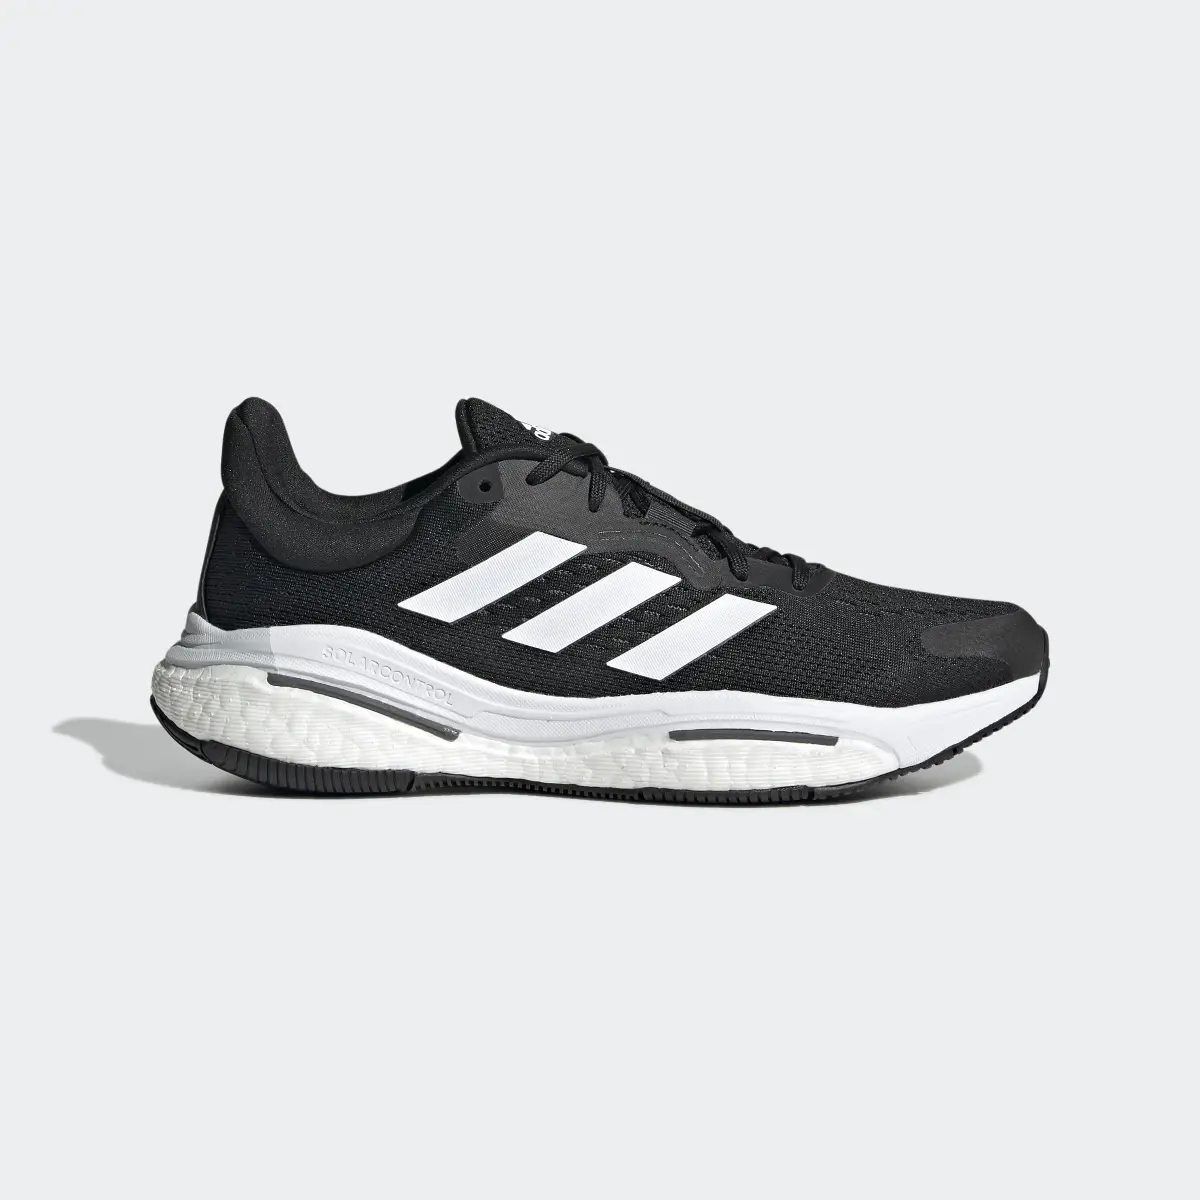 Adidas Solarcontrol Running Shoes. 2